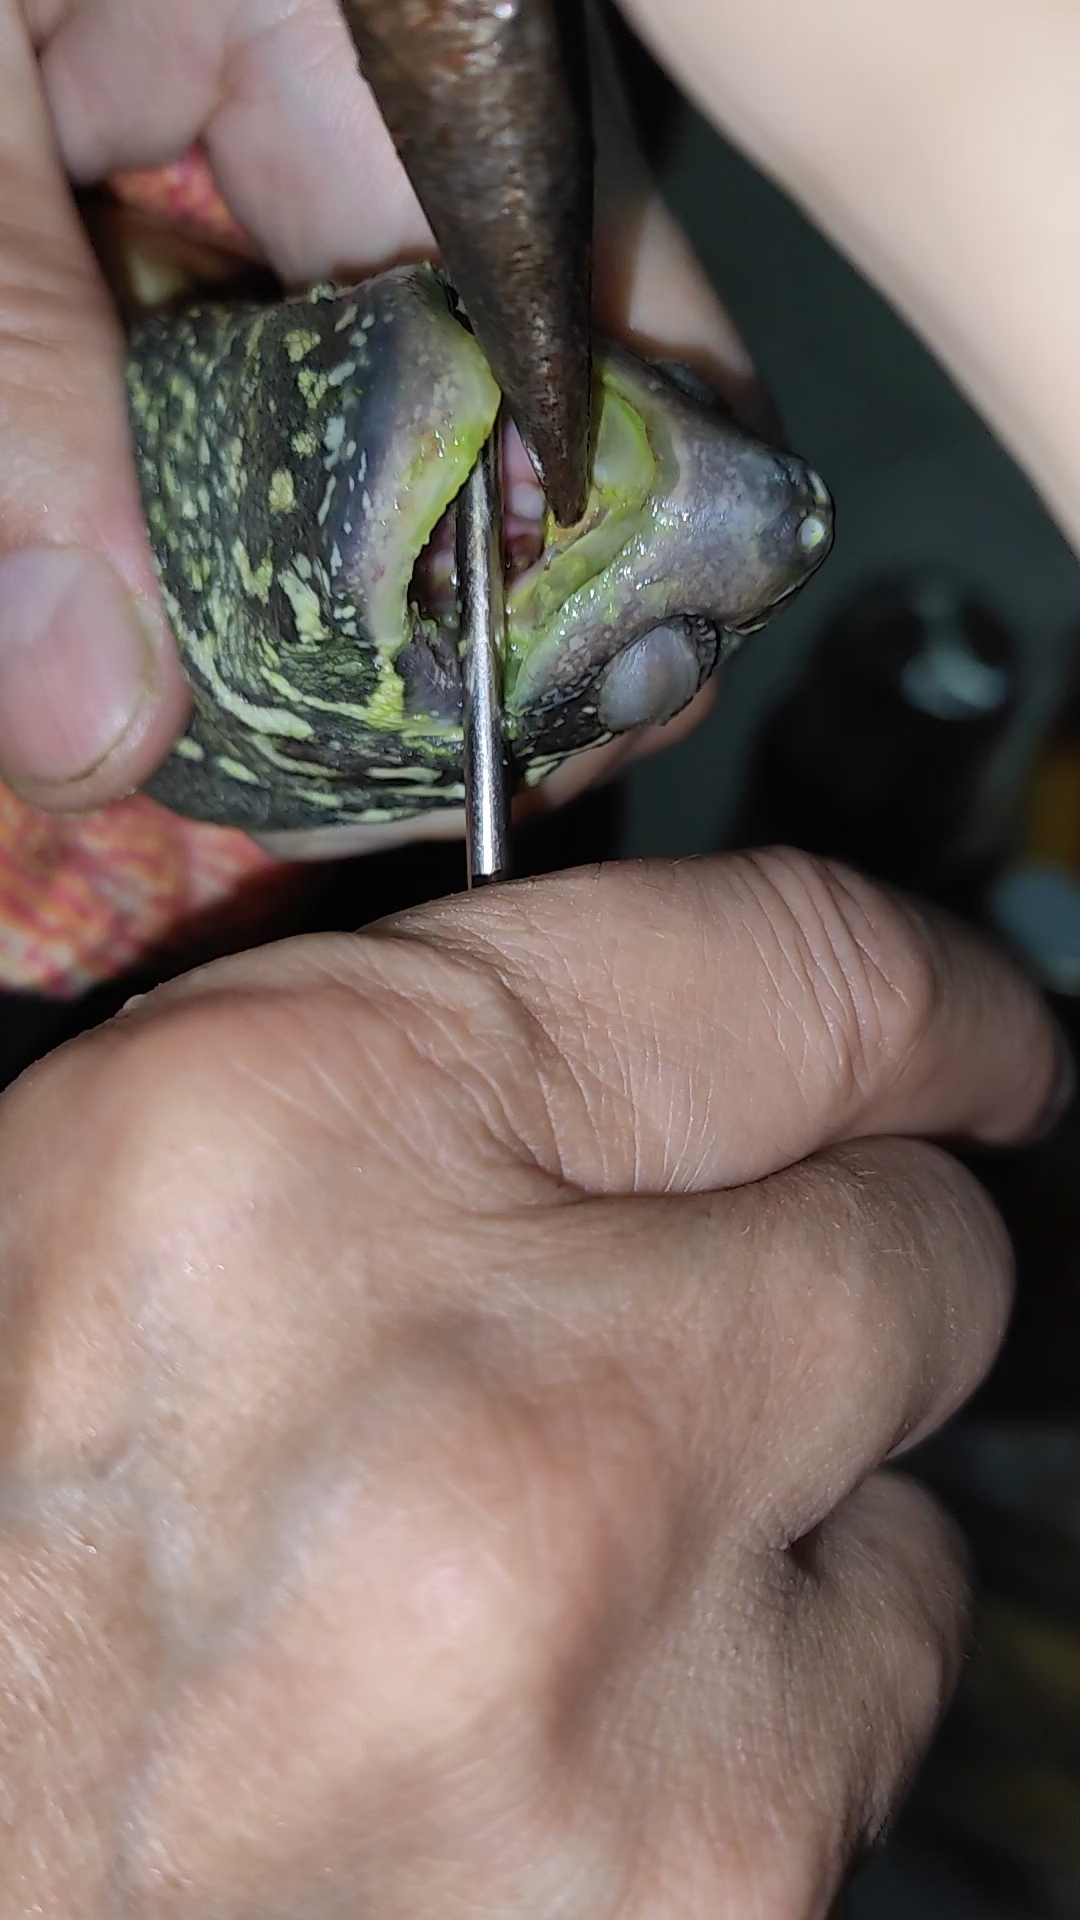 乌龟口腔炎症状图片图片